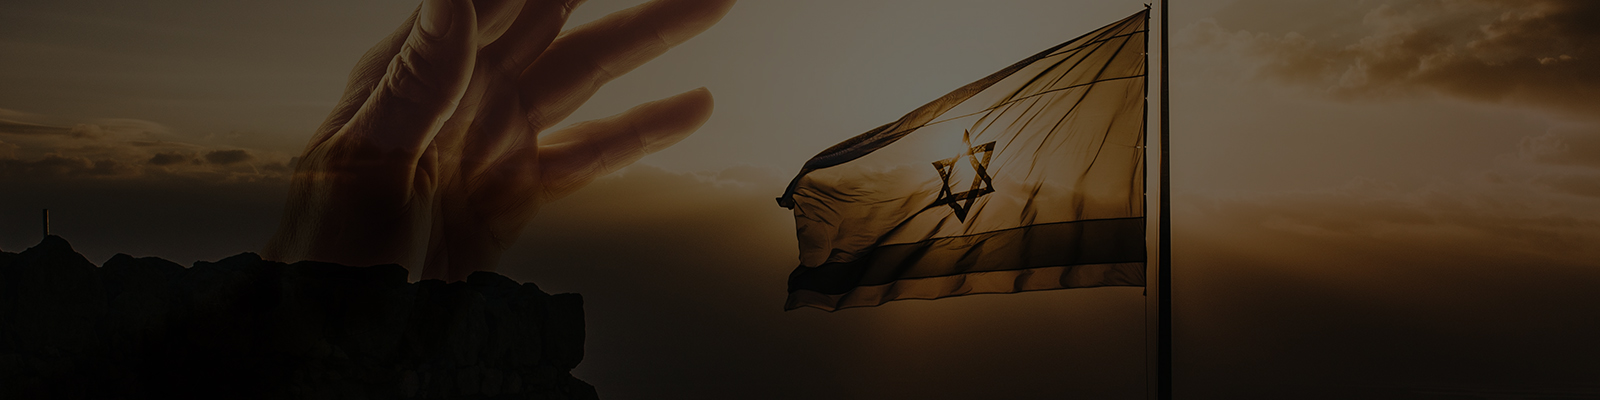 Cover: Gods zegen over Israël